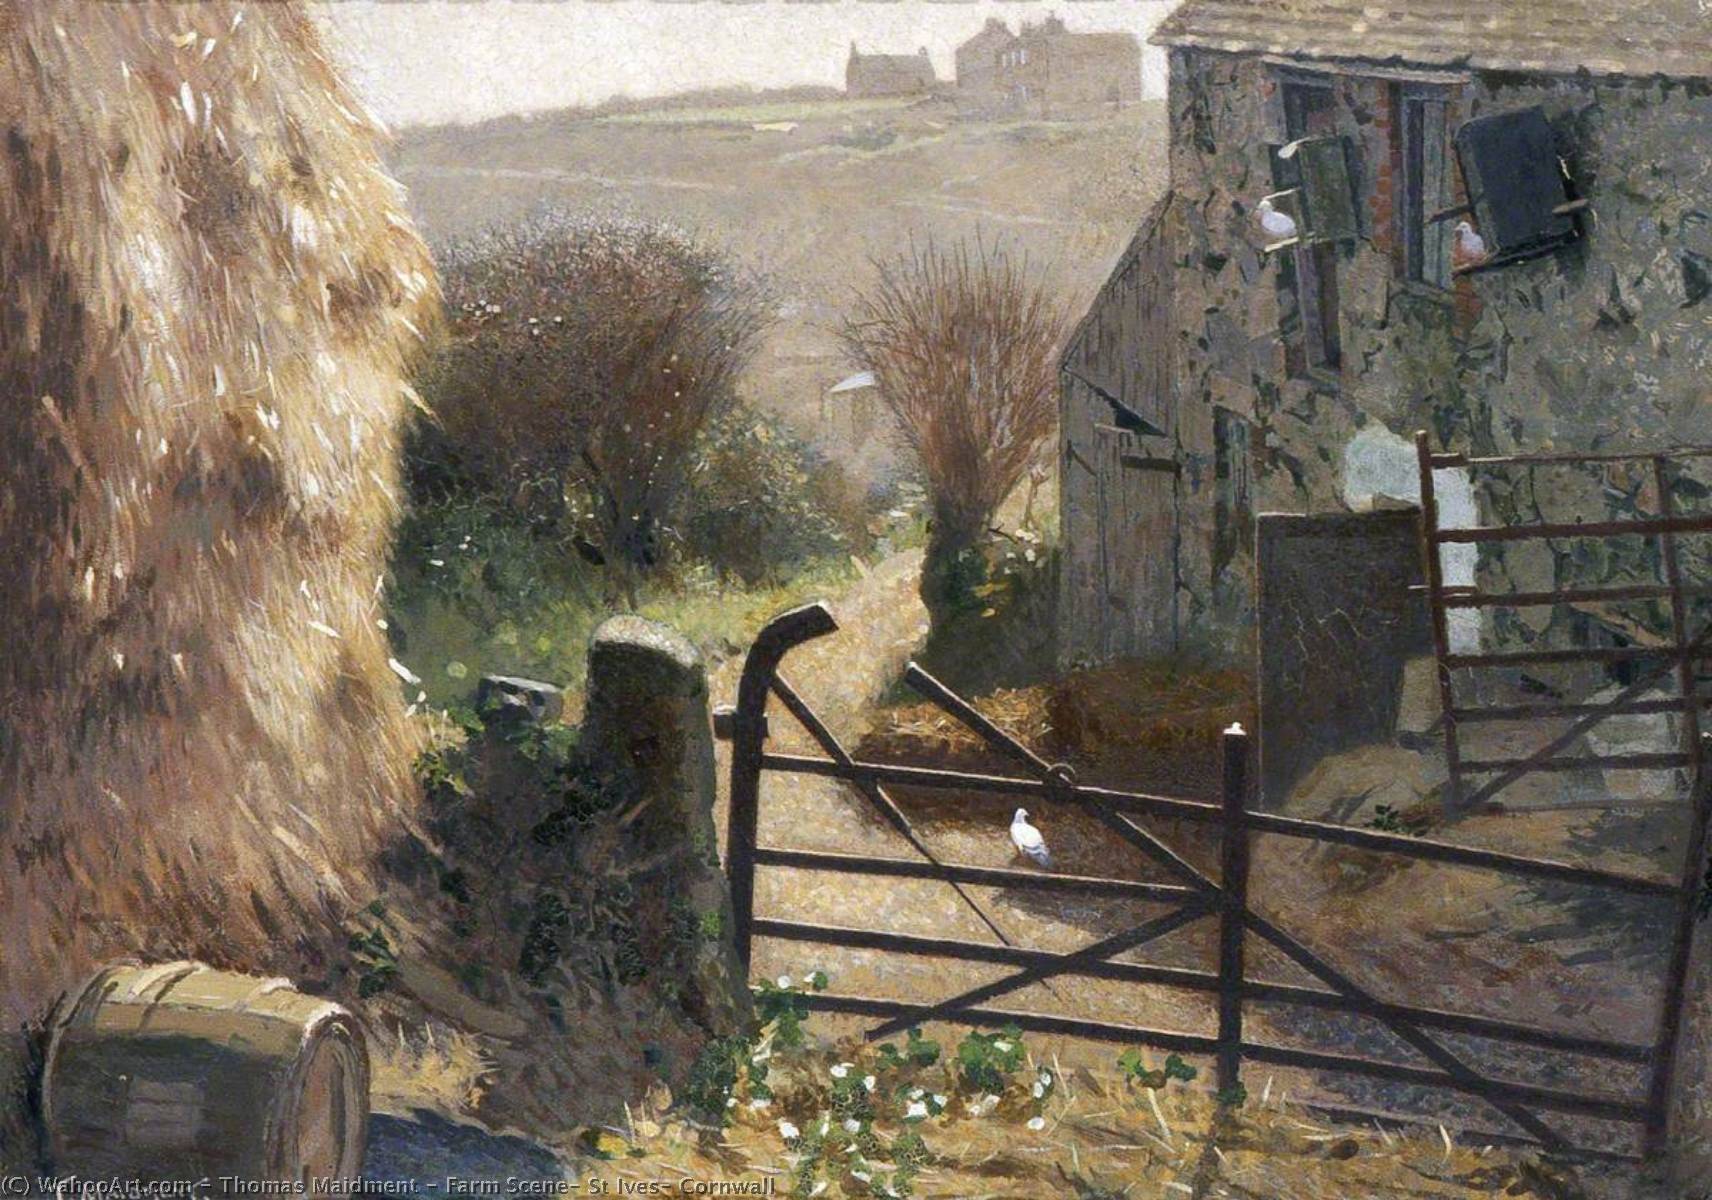 Farm Scene, St Ives, Cornwall, 1932 by Thomas Maidment Thomas Maidment | ArtsDot.com